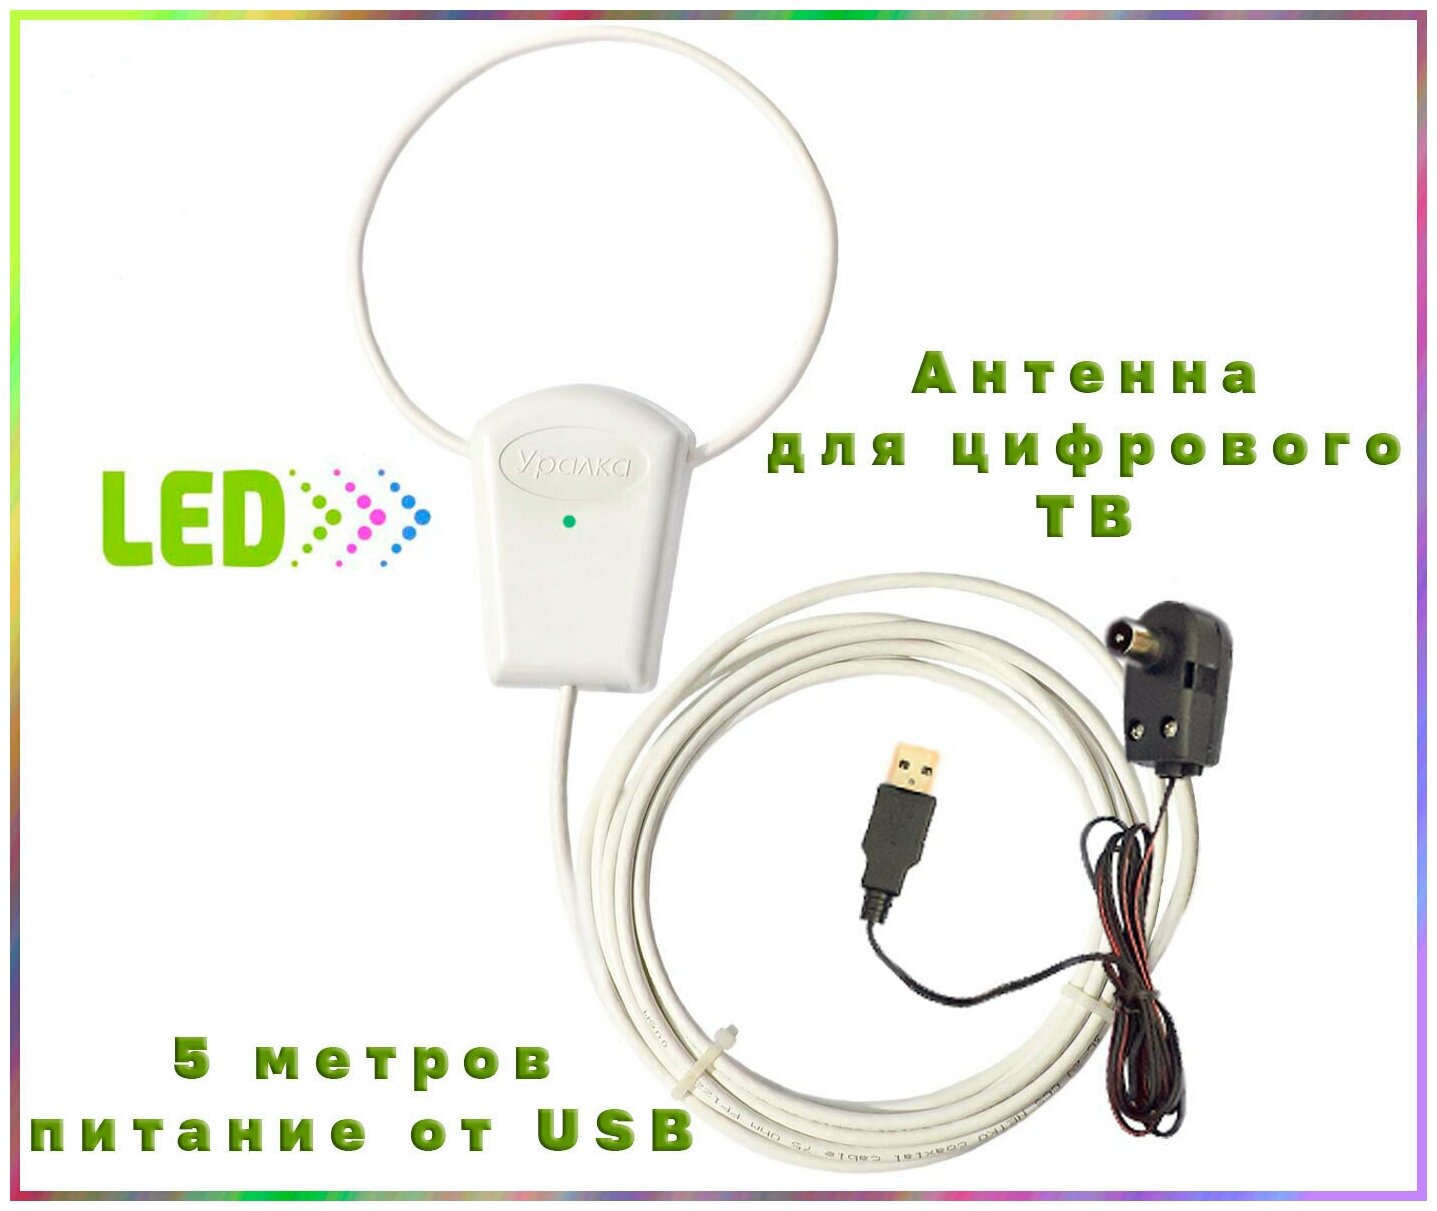 Антенна активная для цифрового DVB-T2 ТВ "Уралка USB 5 метров" с присоской